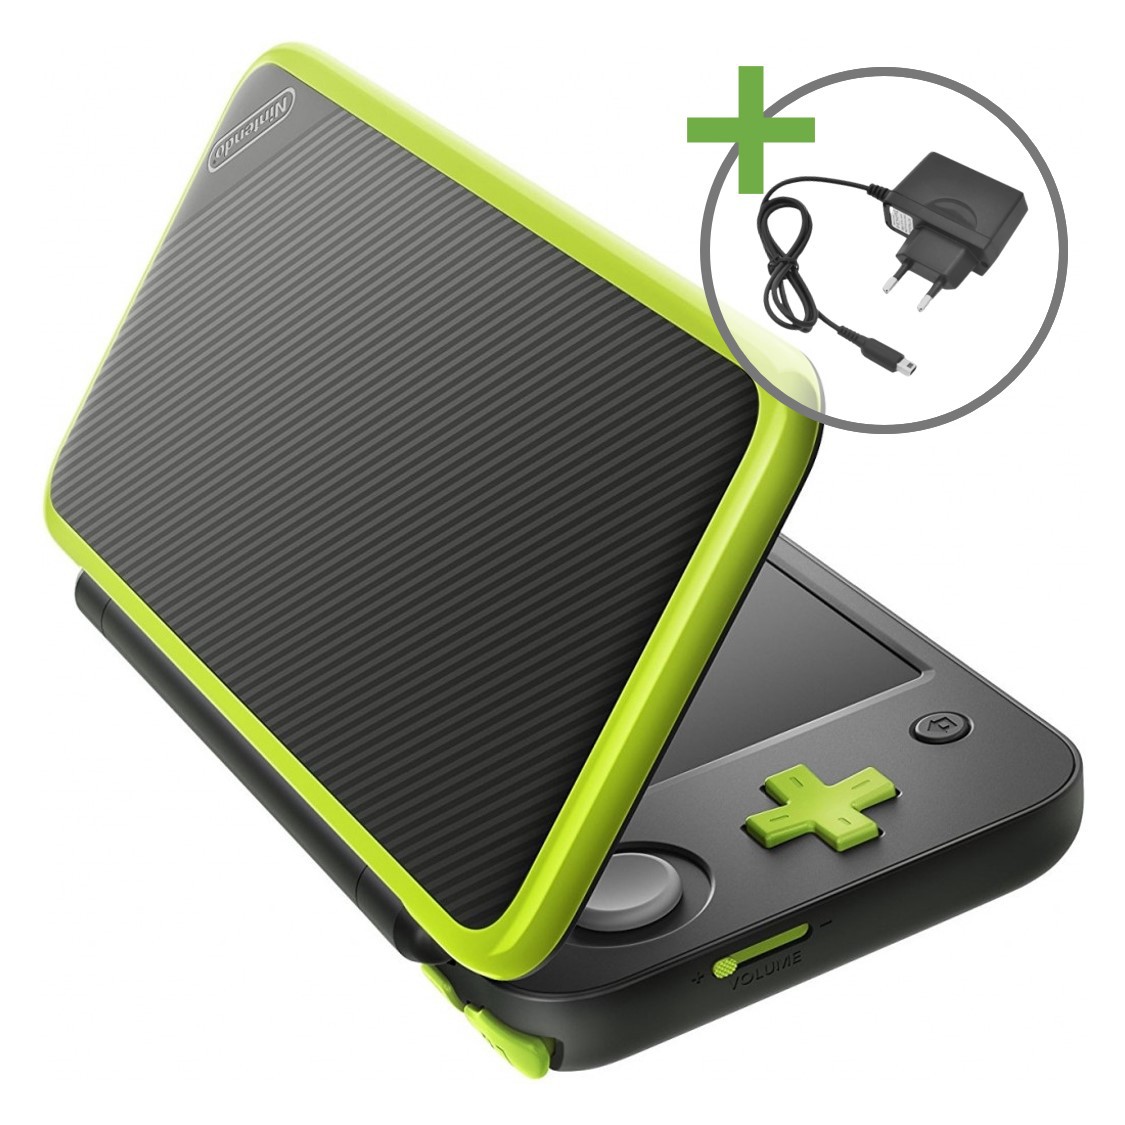 New Nintendo 2DS XL - Black/Lime [Complete] - Nintendo 3DS Hardware - 3